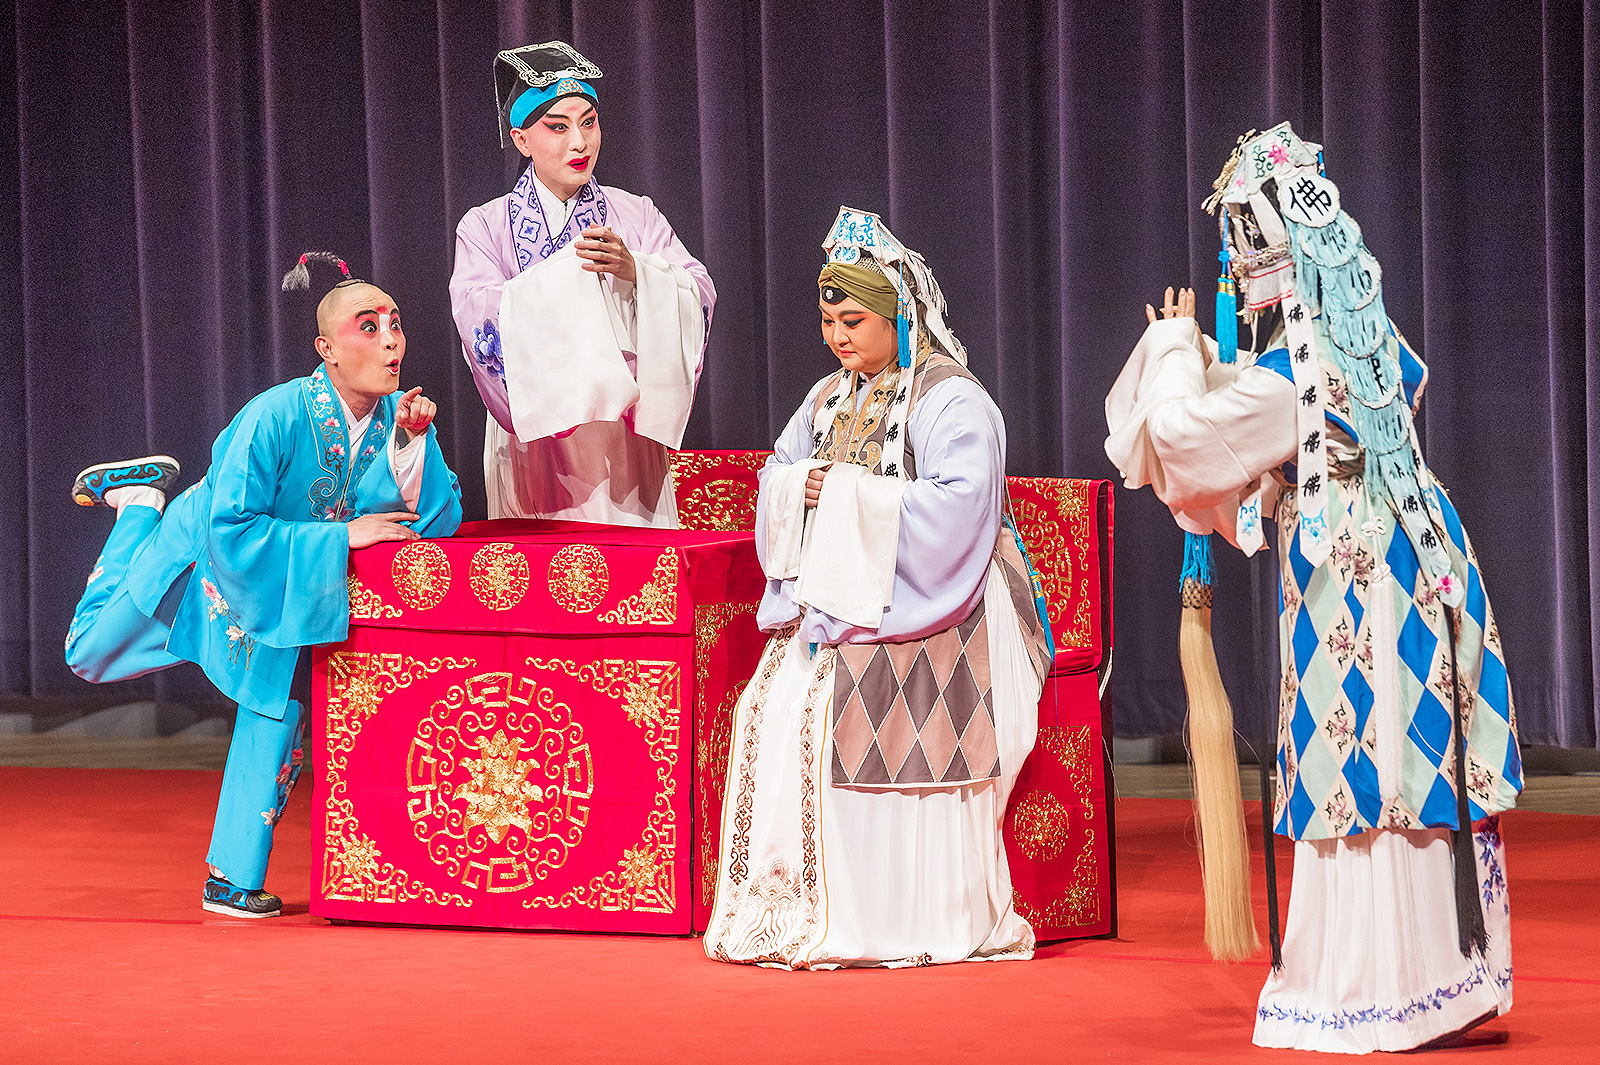 The “Kunqu Opera Ensemble” presented by CityUHK enhances community interaction through performing arts.